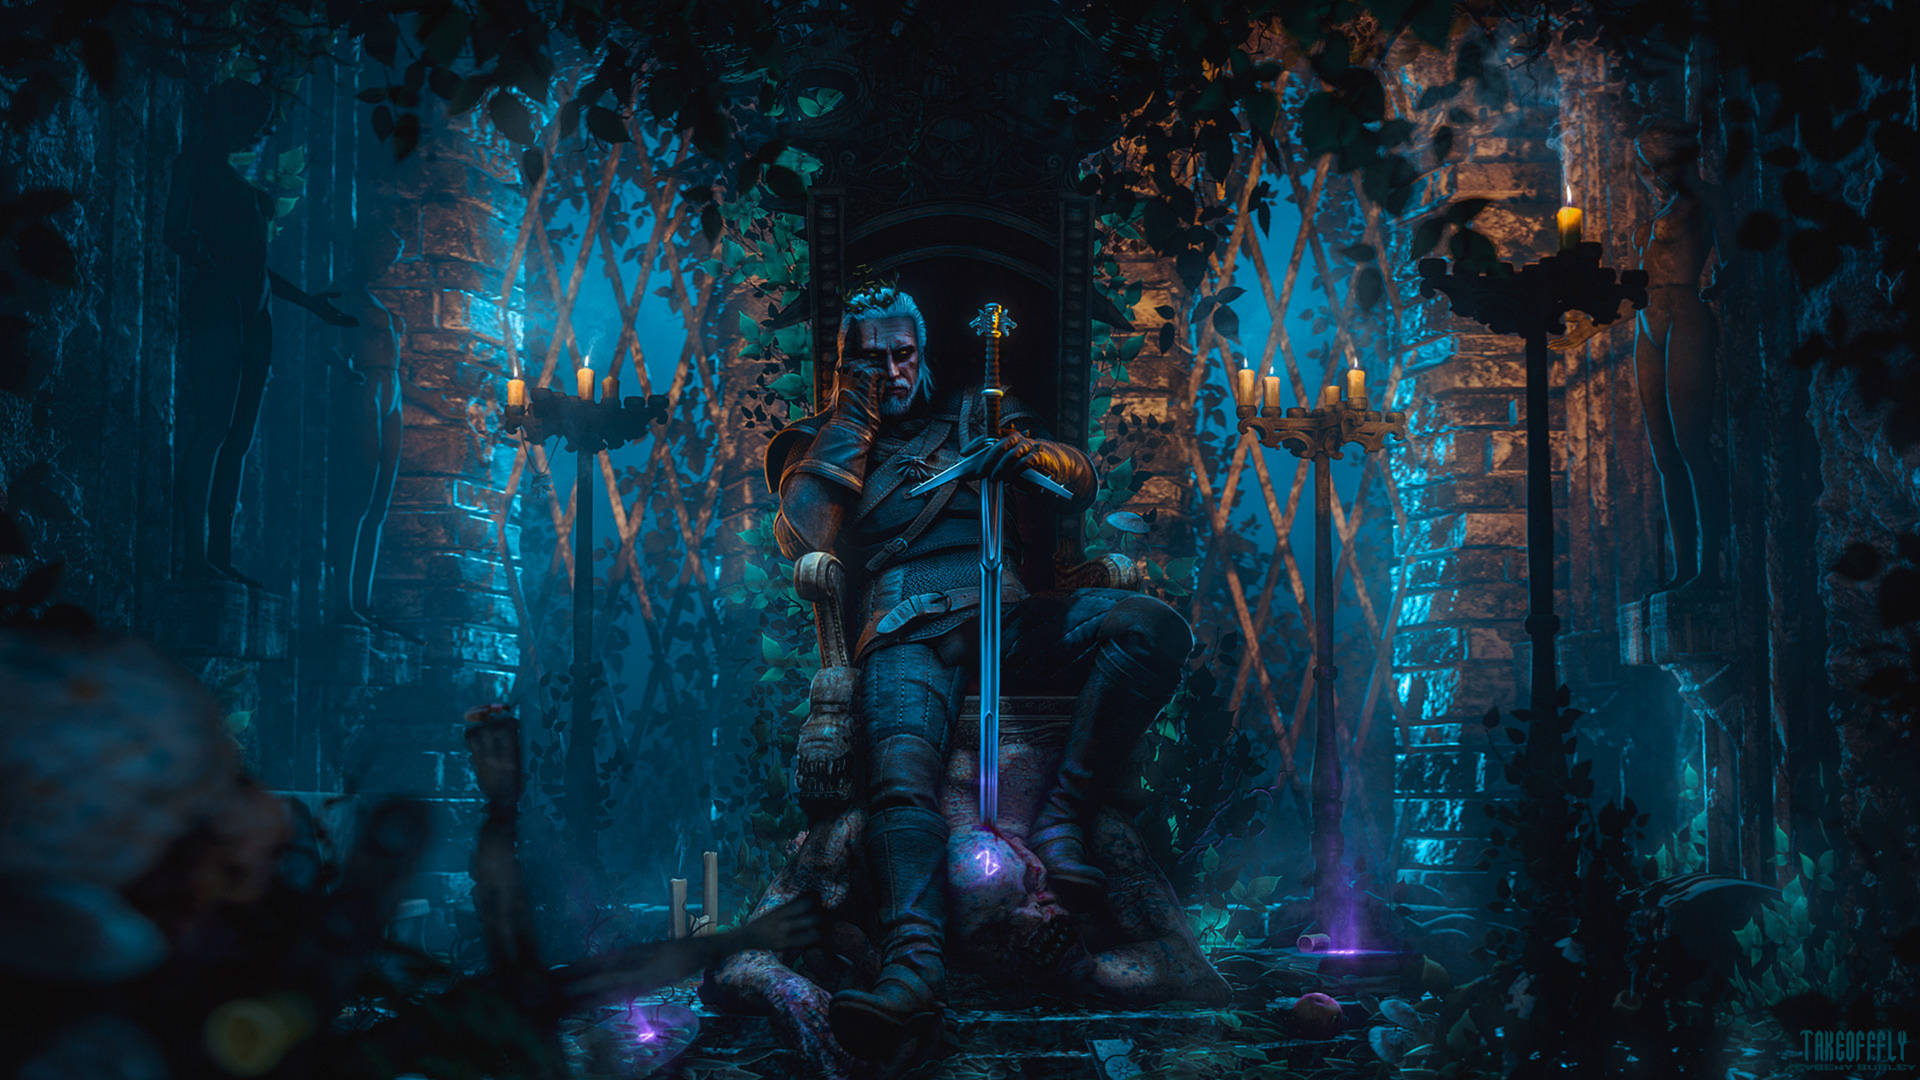 Download Witcher 3 4k Geralt On Throne Wallpaper | Wallpapers.com